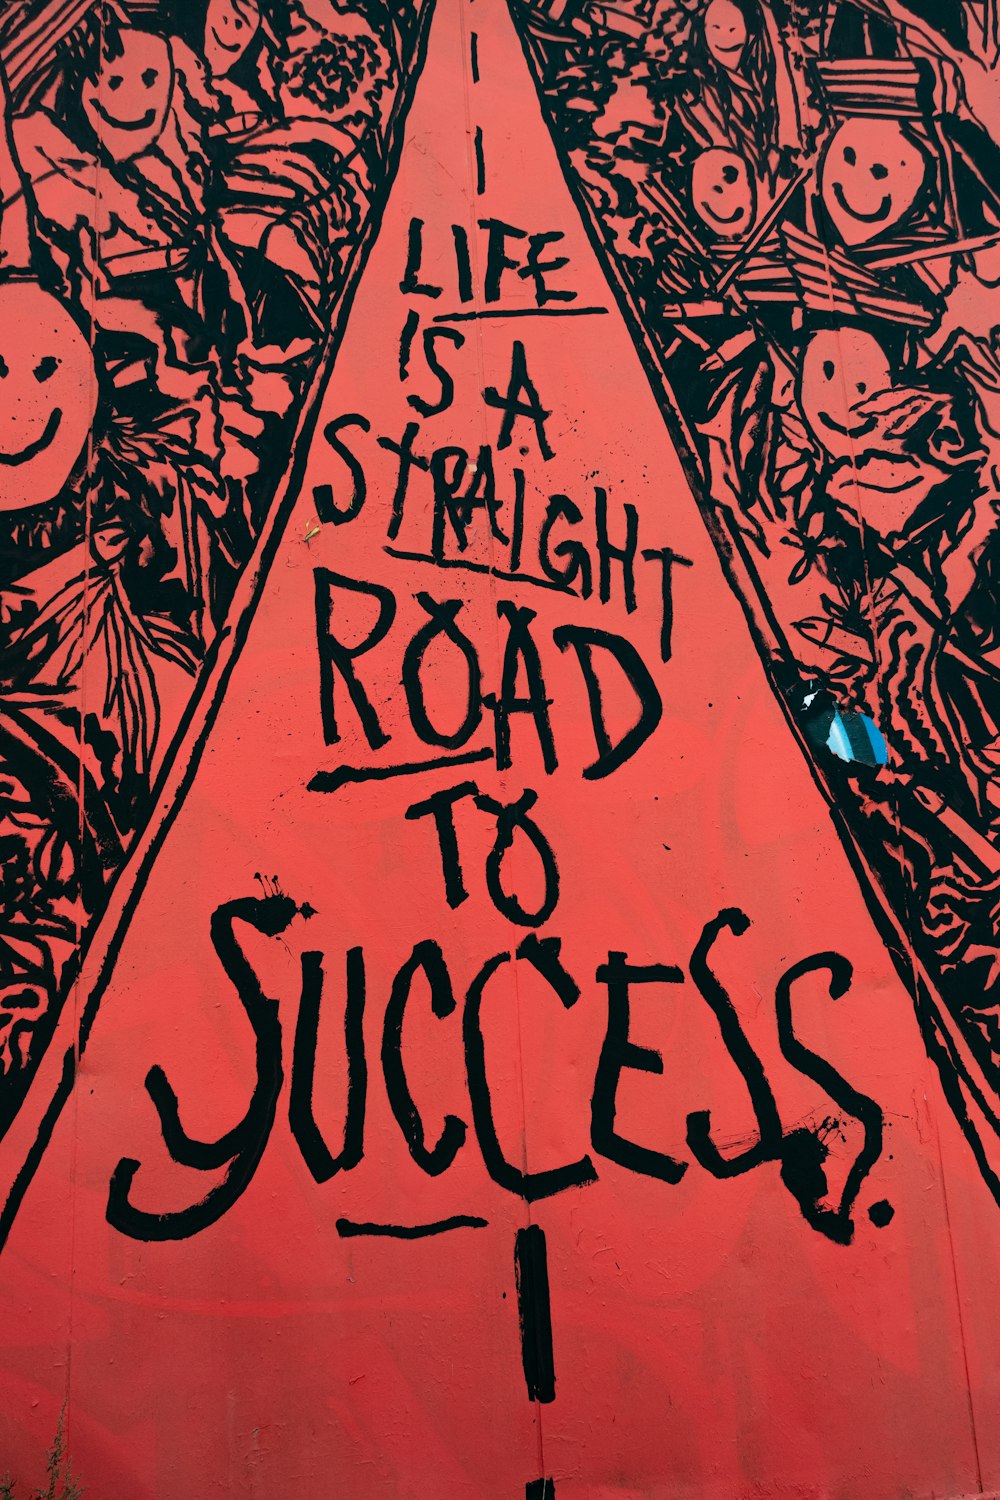 La vida es una obra de arte de Straight Road to Success